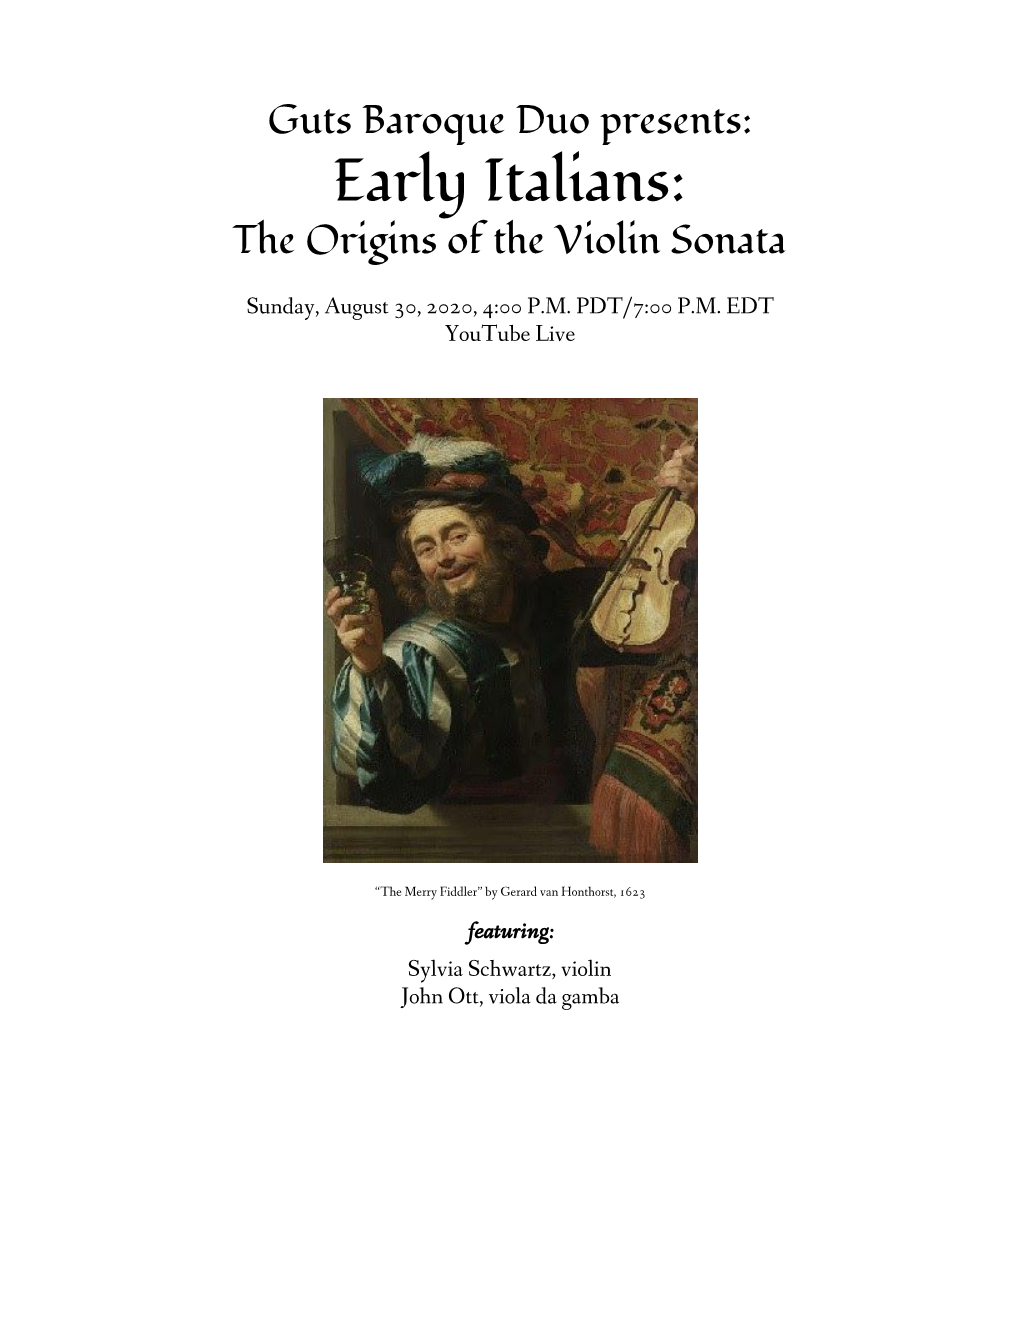 Early Italians: the Origins of the Violin Sonata